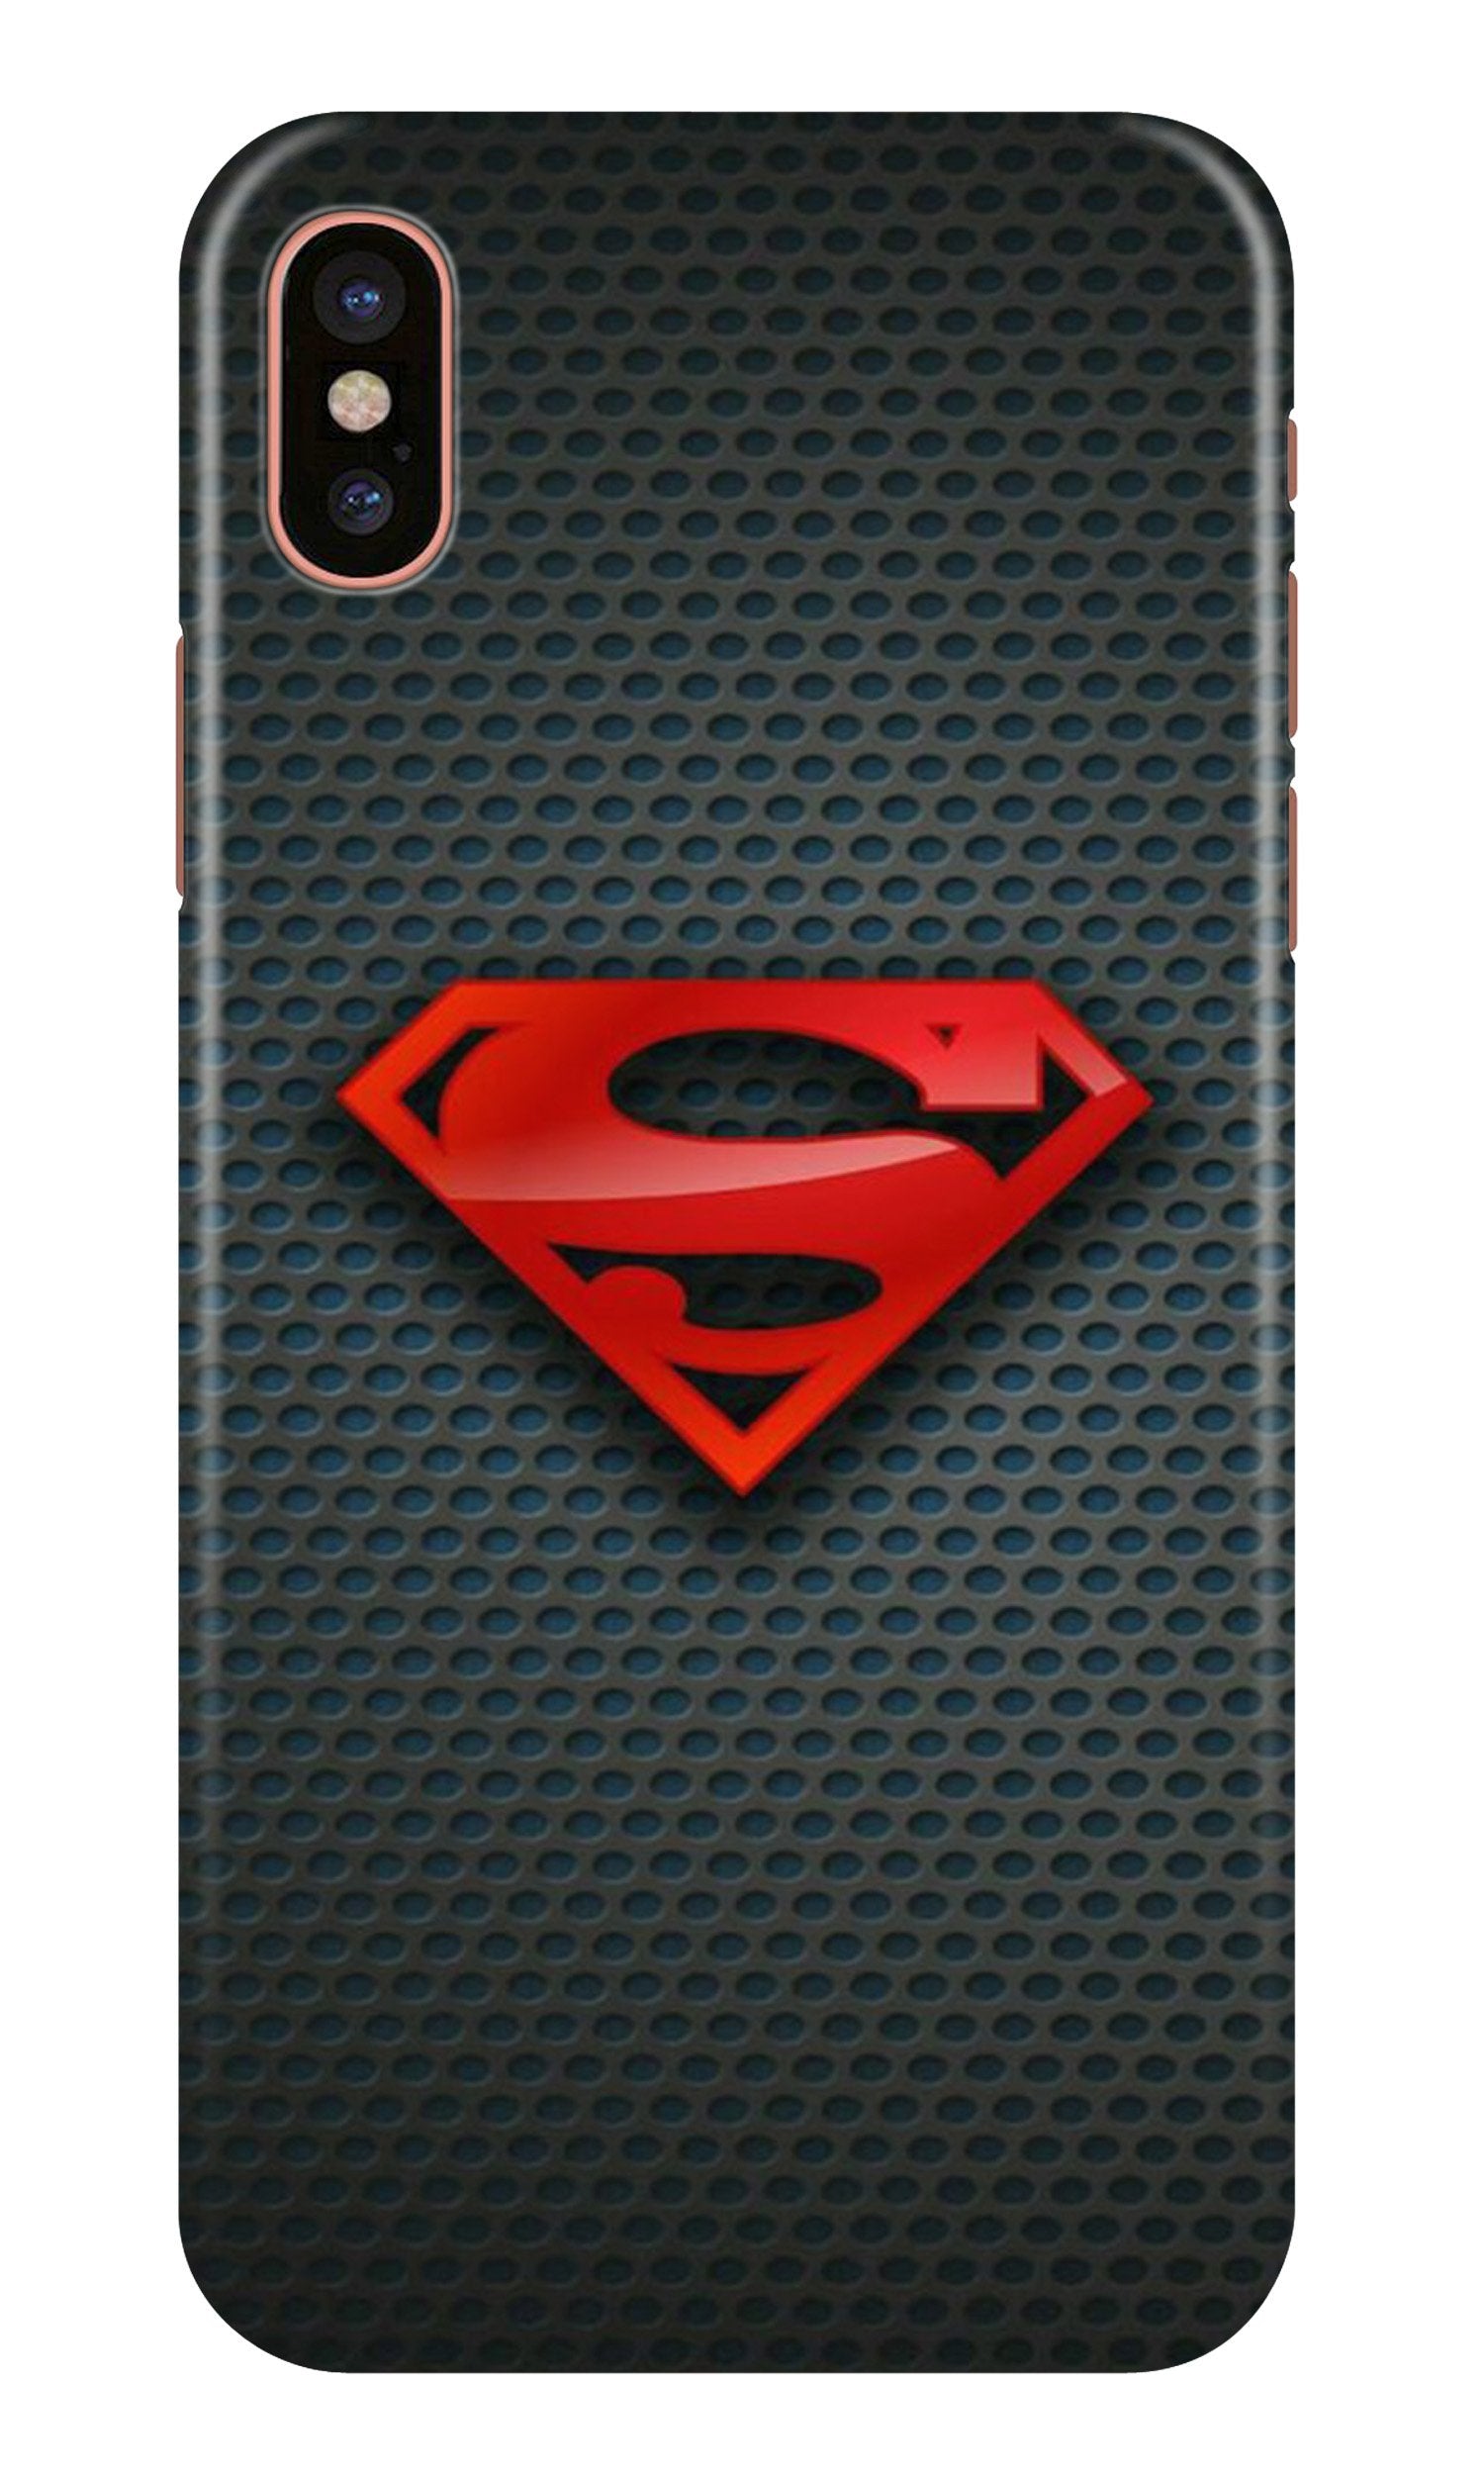 Superman Case for iPhone Xs Max (Design No. 247)